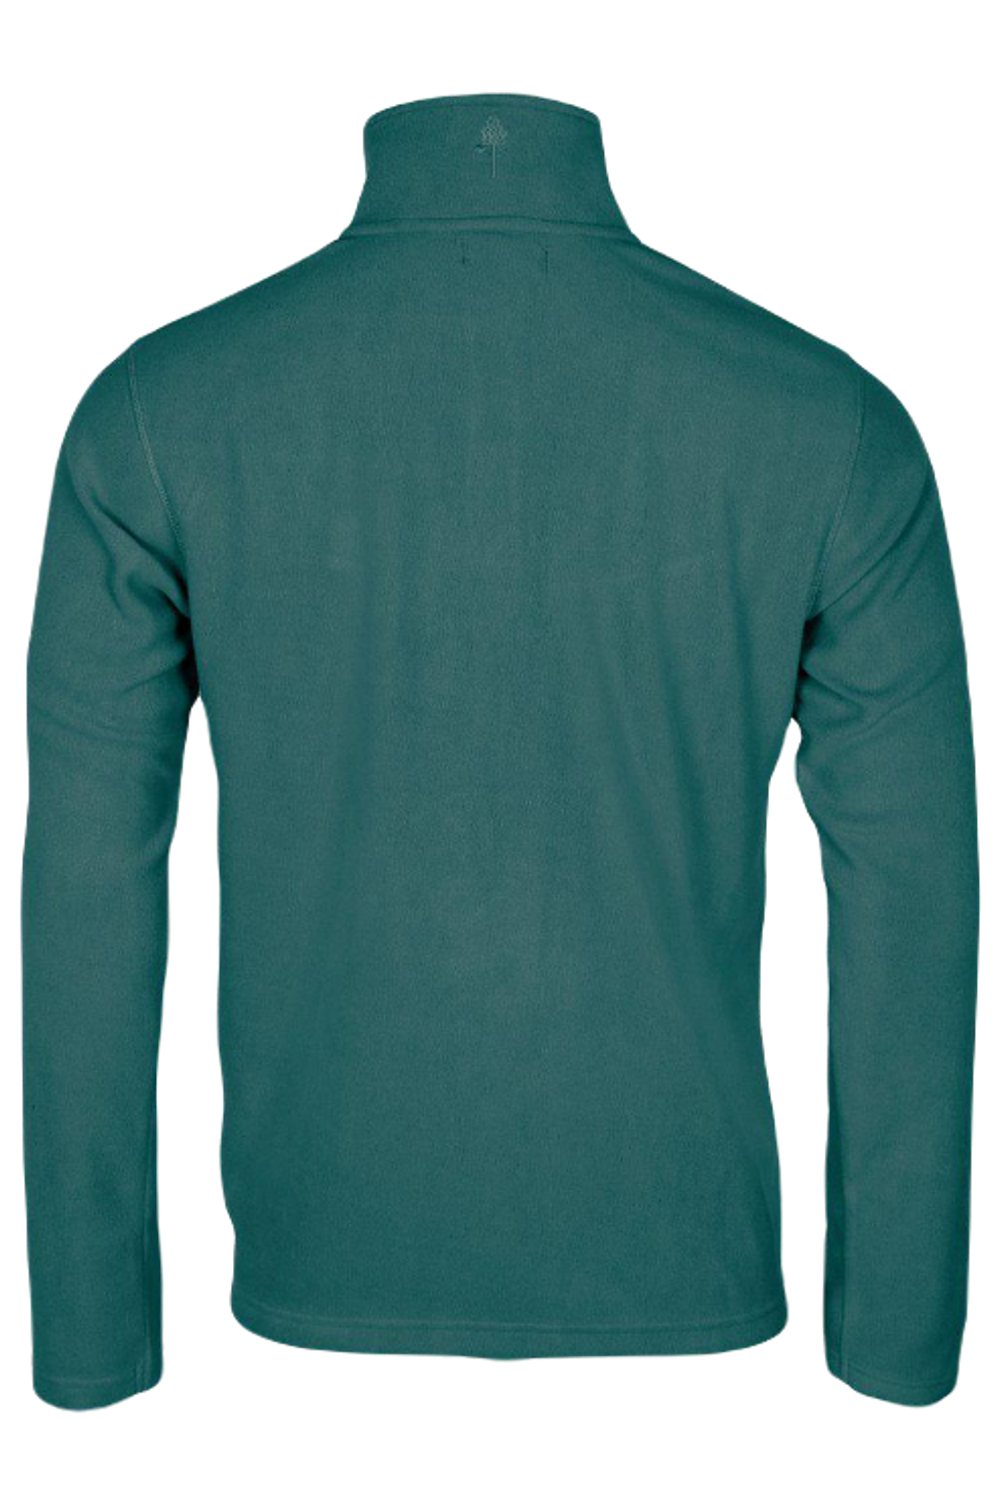 Pinewood Mens Tiveden Fleece Sweater In Atlantic Blue